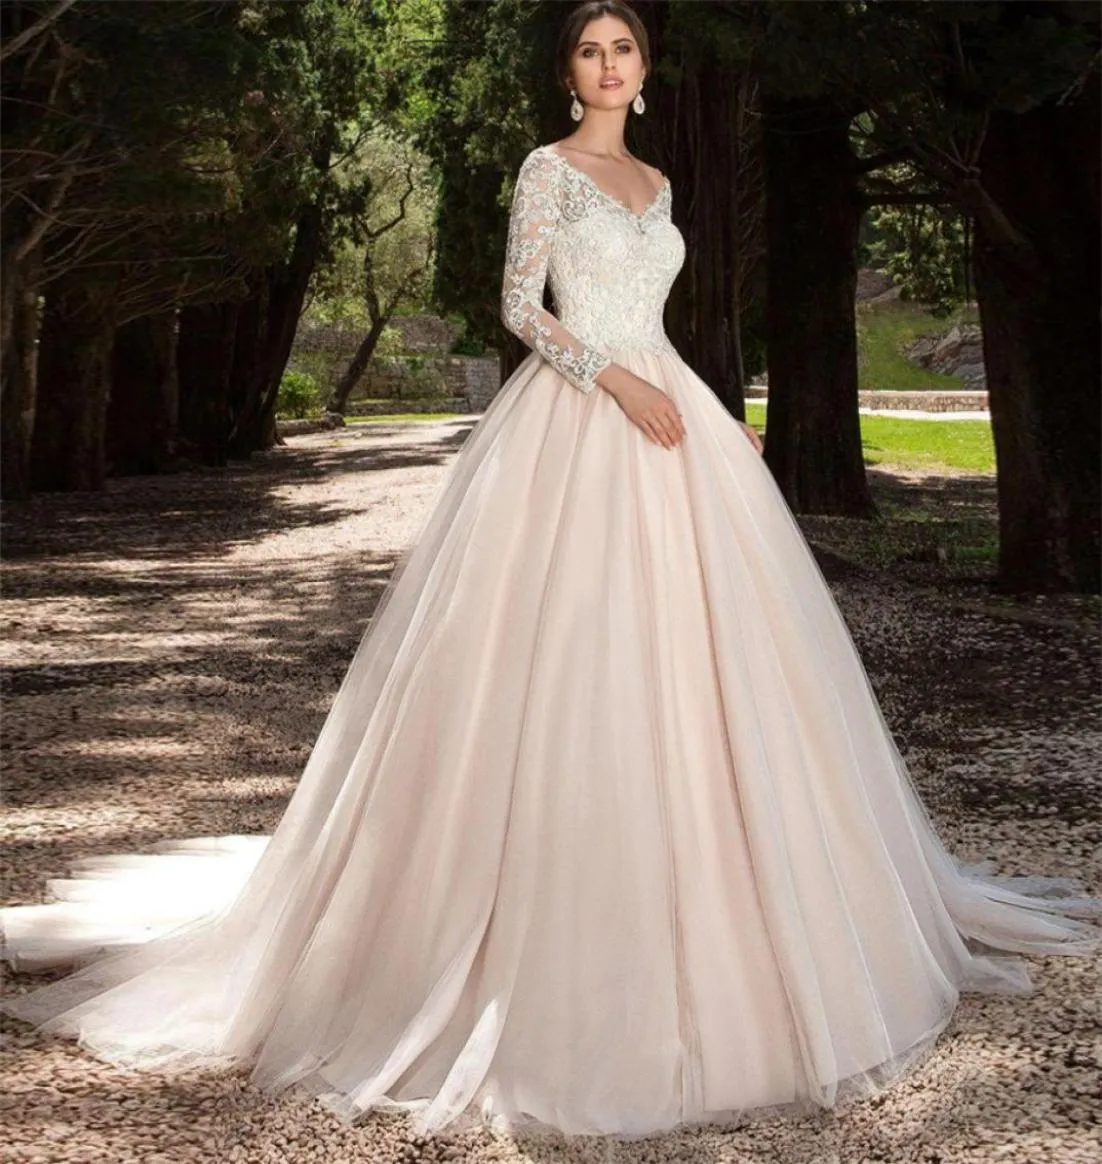 Tulle Long Sleeve Blush Color Wedding Dress VNeck Ball Gown Appliques Lace casamento Bridal Gowns Illusion Back vestido de noiva1276816